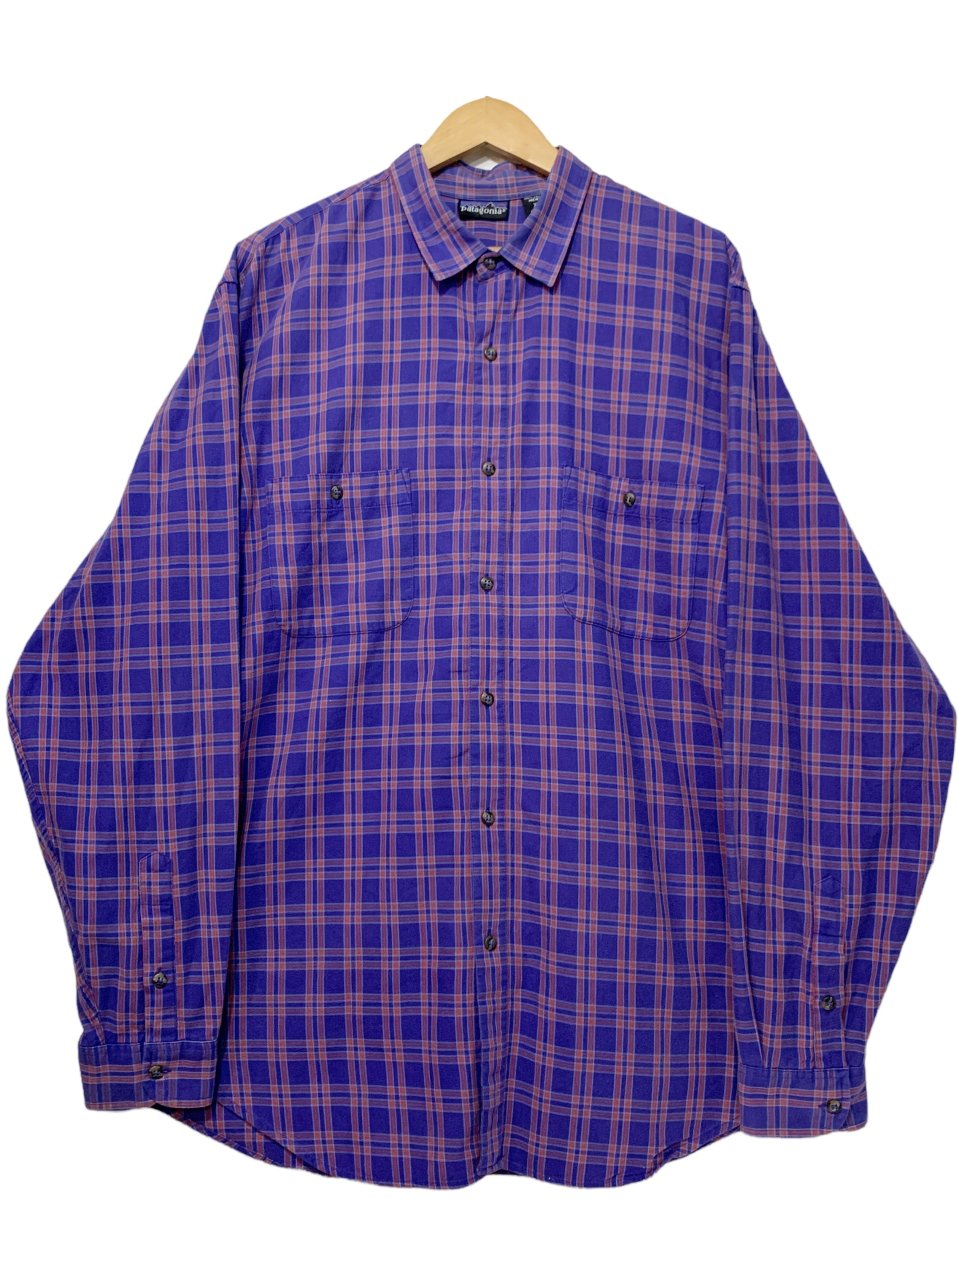 80~90s patagonia Cotton L/S Check Shirt 青紫オレンジ XL パタゴニア 